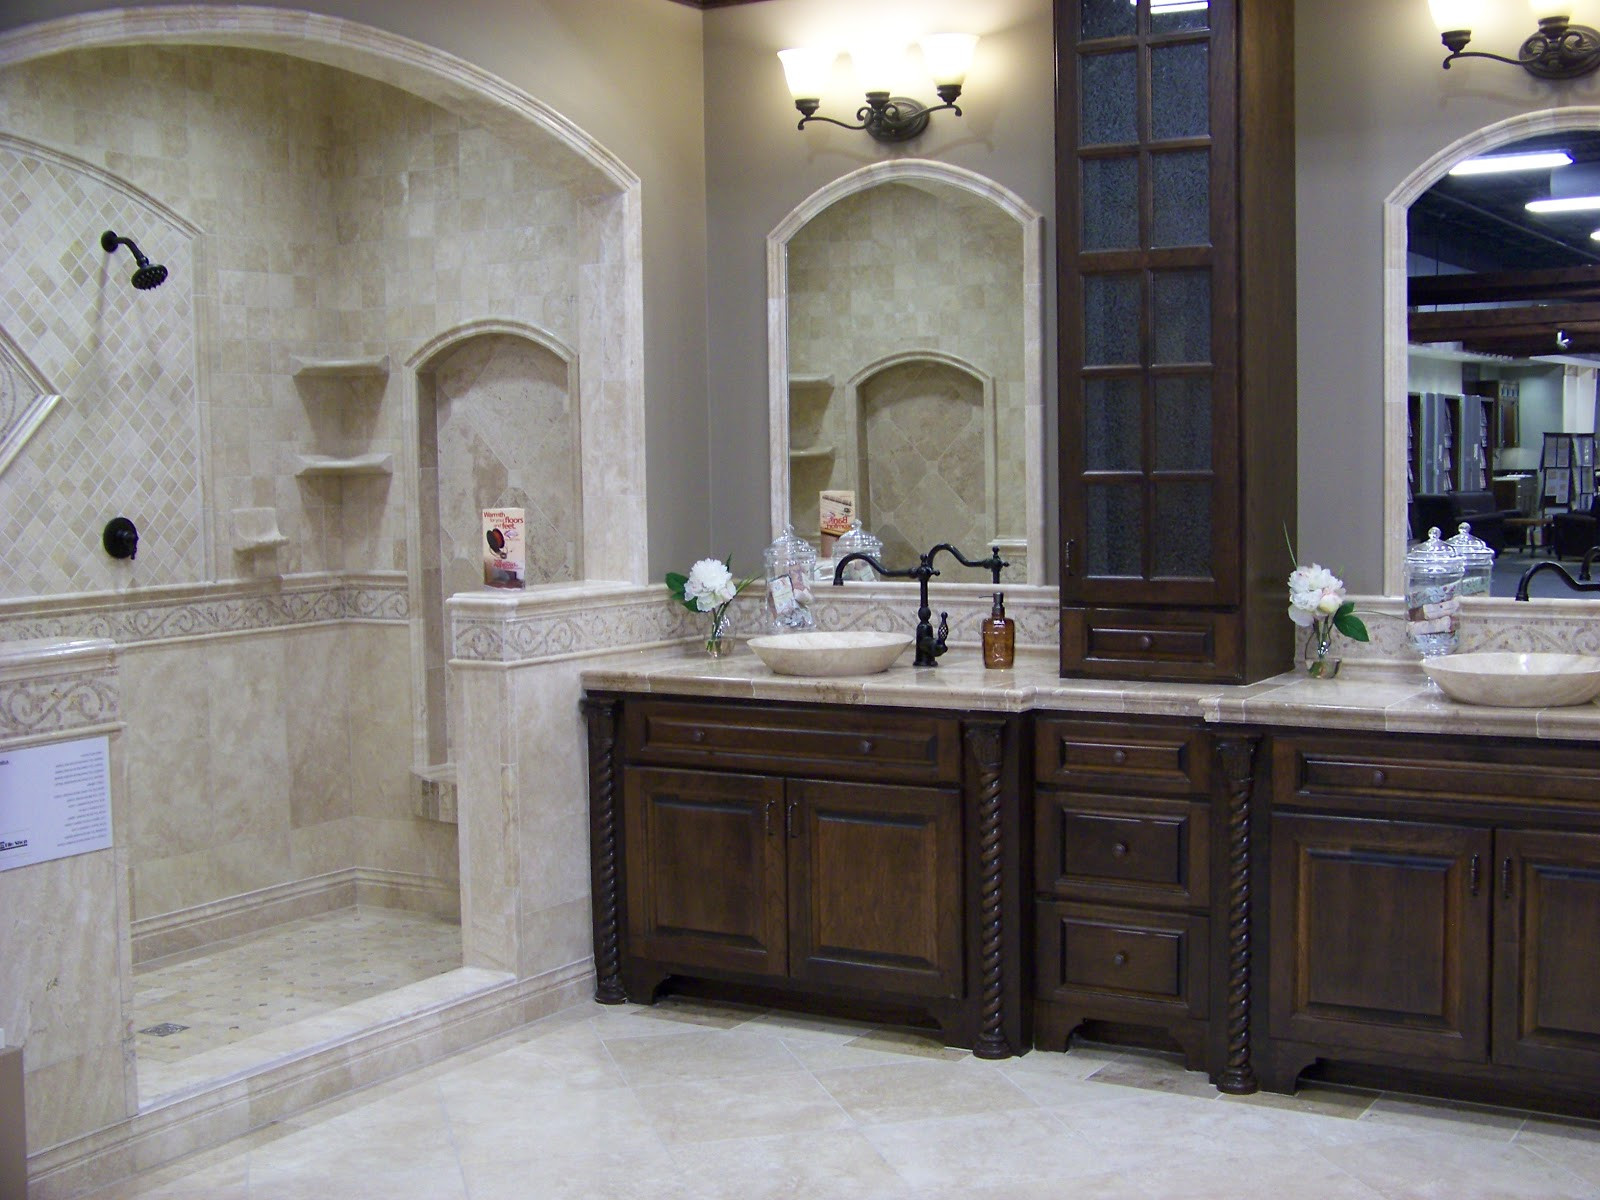 Master Bathroom Shower Ideas
 Home Decor Bud ista Bathroom Inspiration The Tile Shop